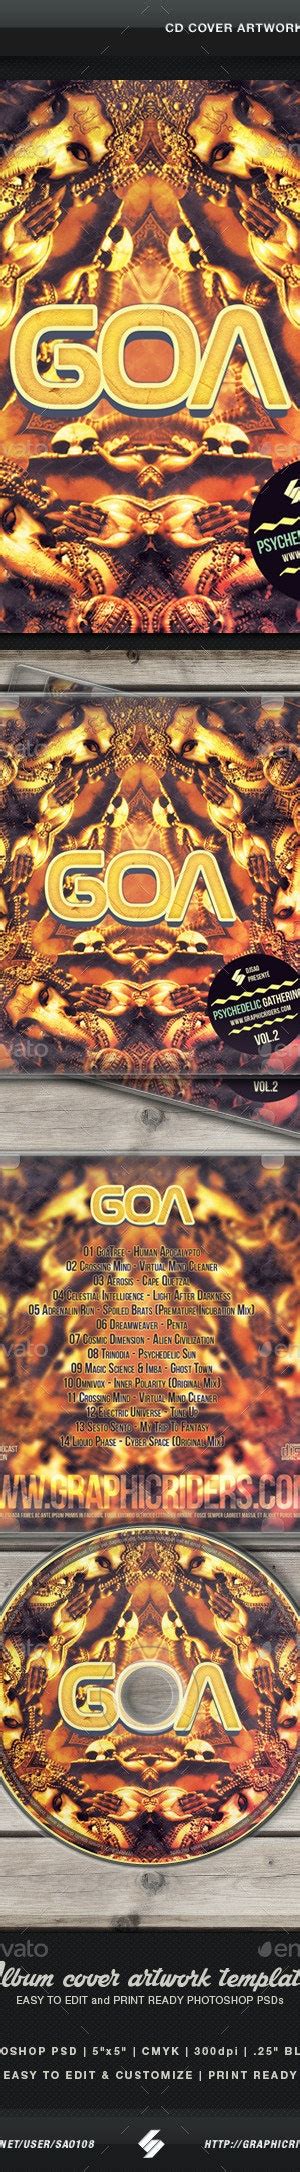 Goa Trance Volume 2 Cd Cover Artwork Template By Sao108 Graphicriver